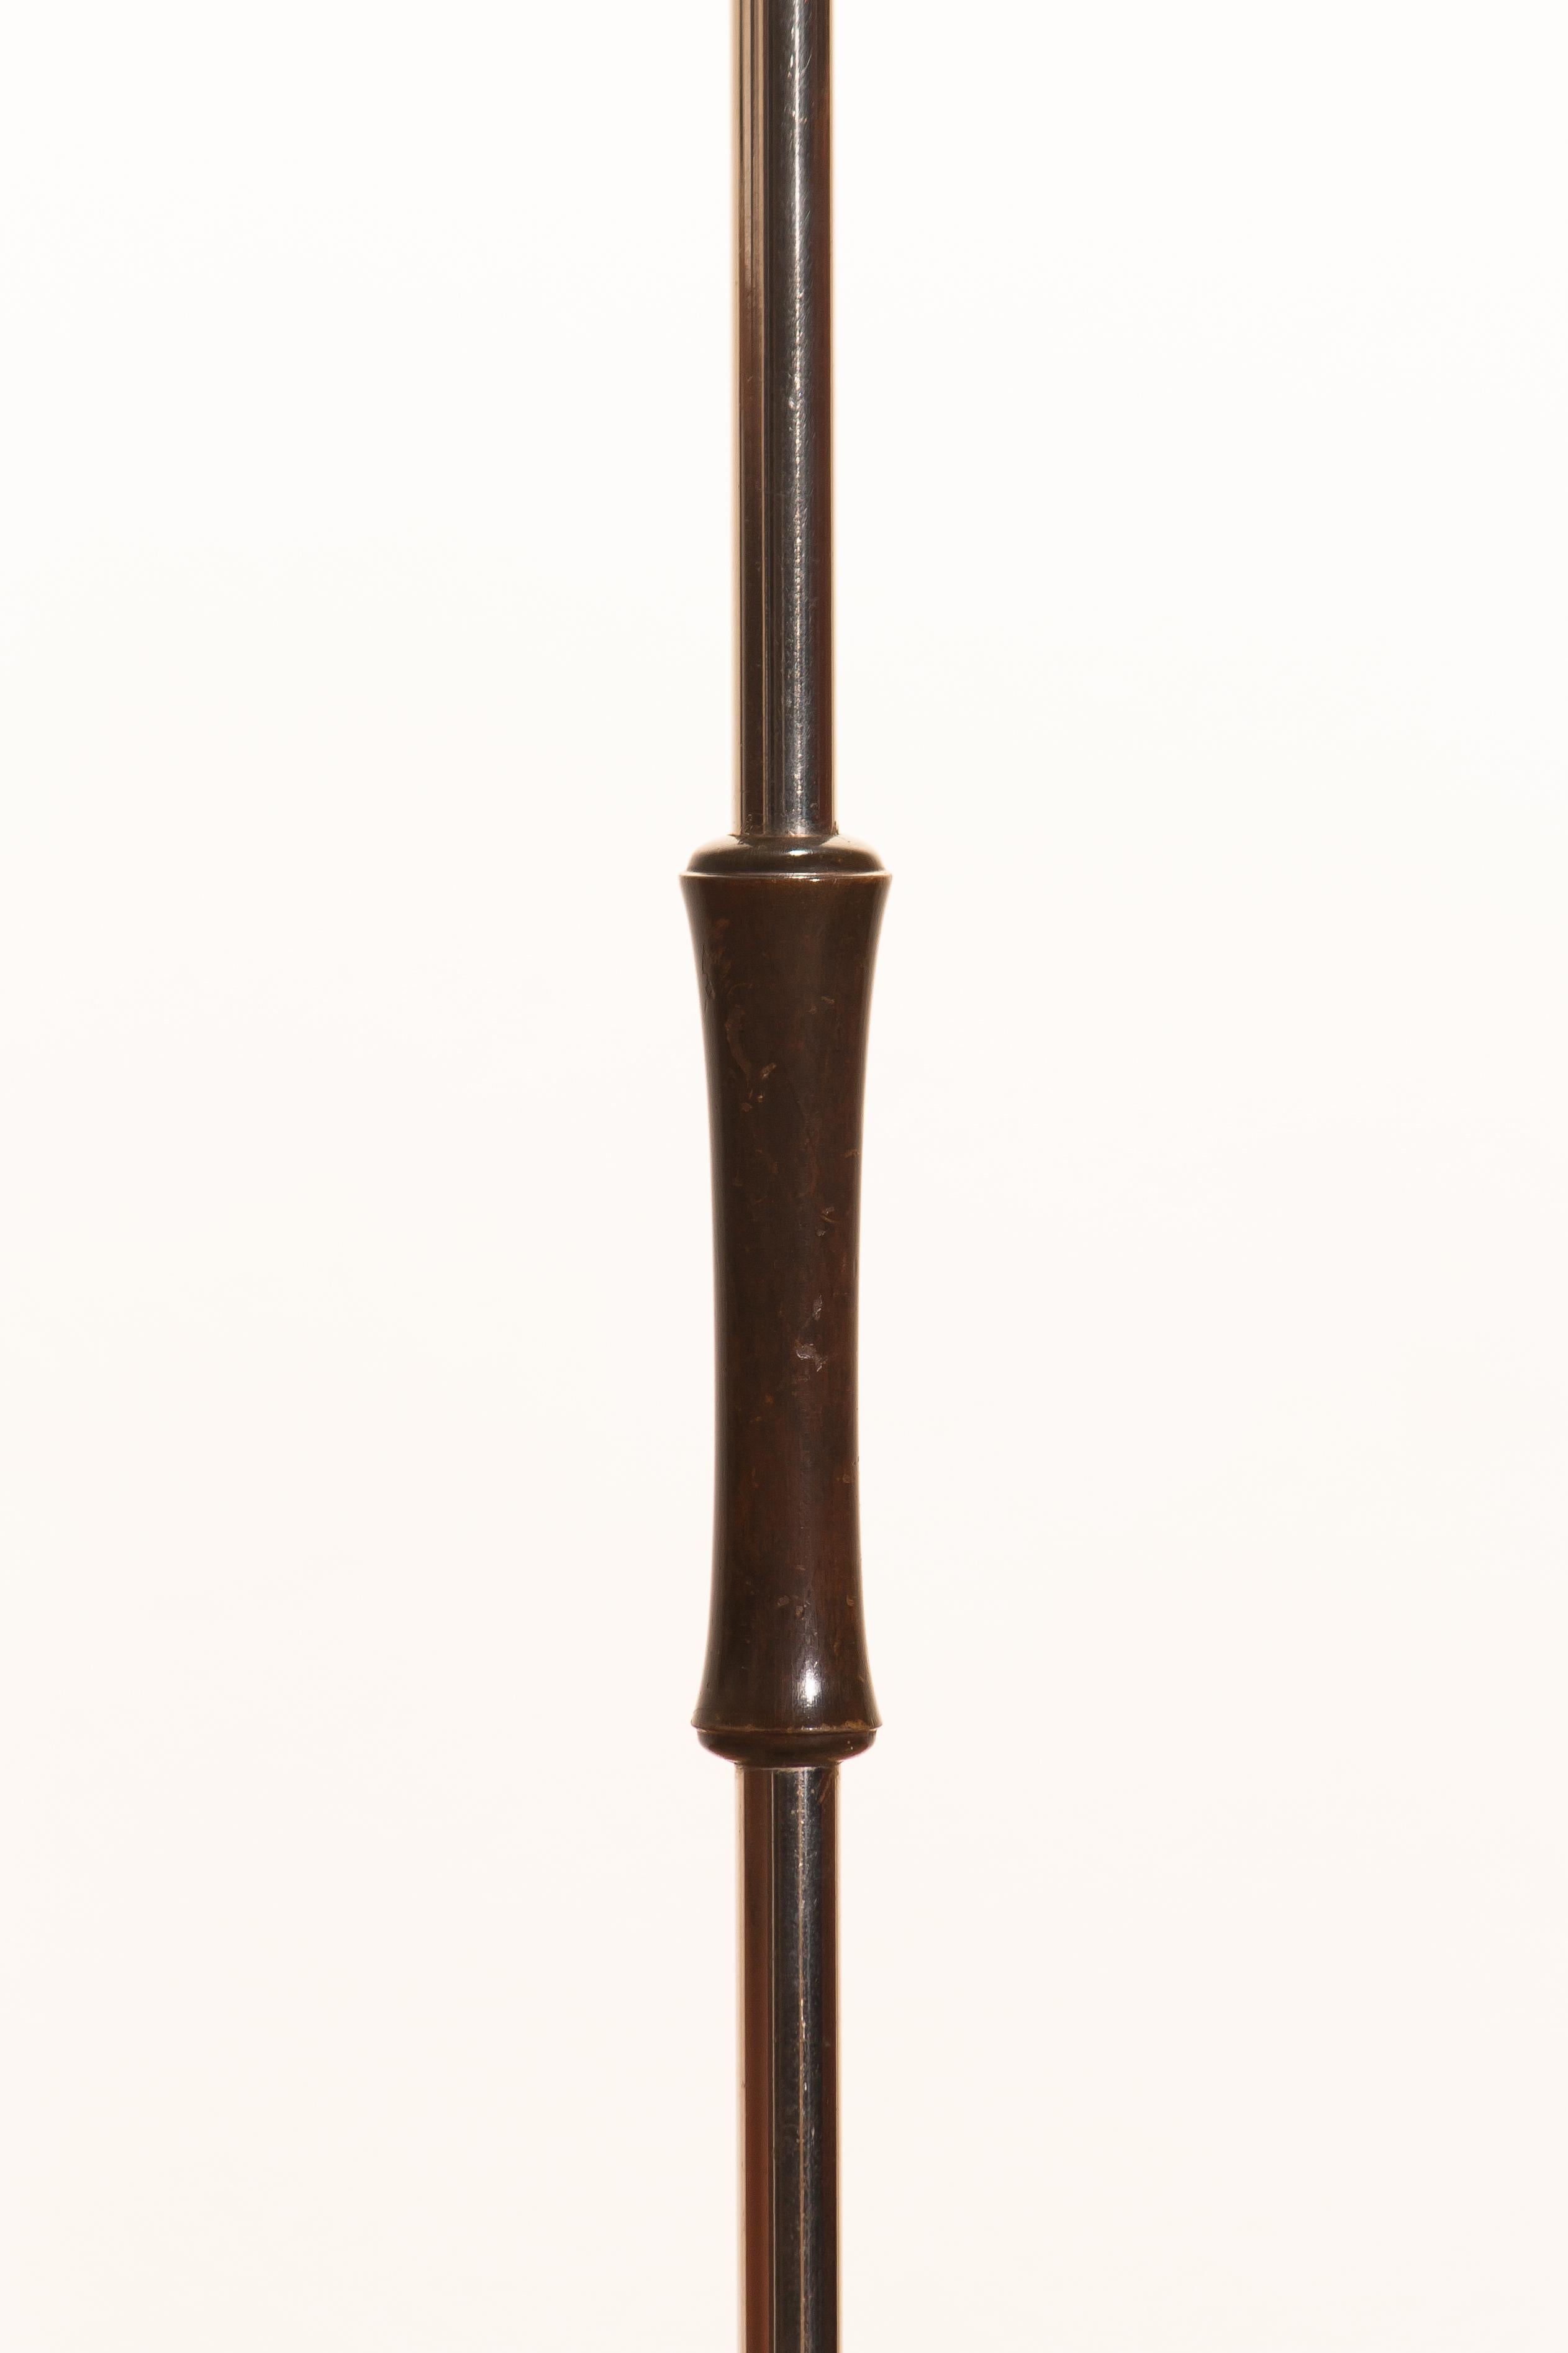 1940s, Art Deco Jugendstil Chromed Floor Lamp with Wicker Shade, Limited Edition 1